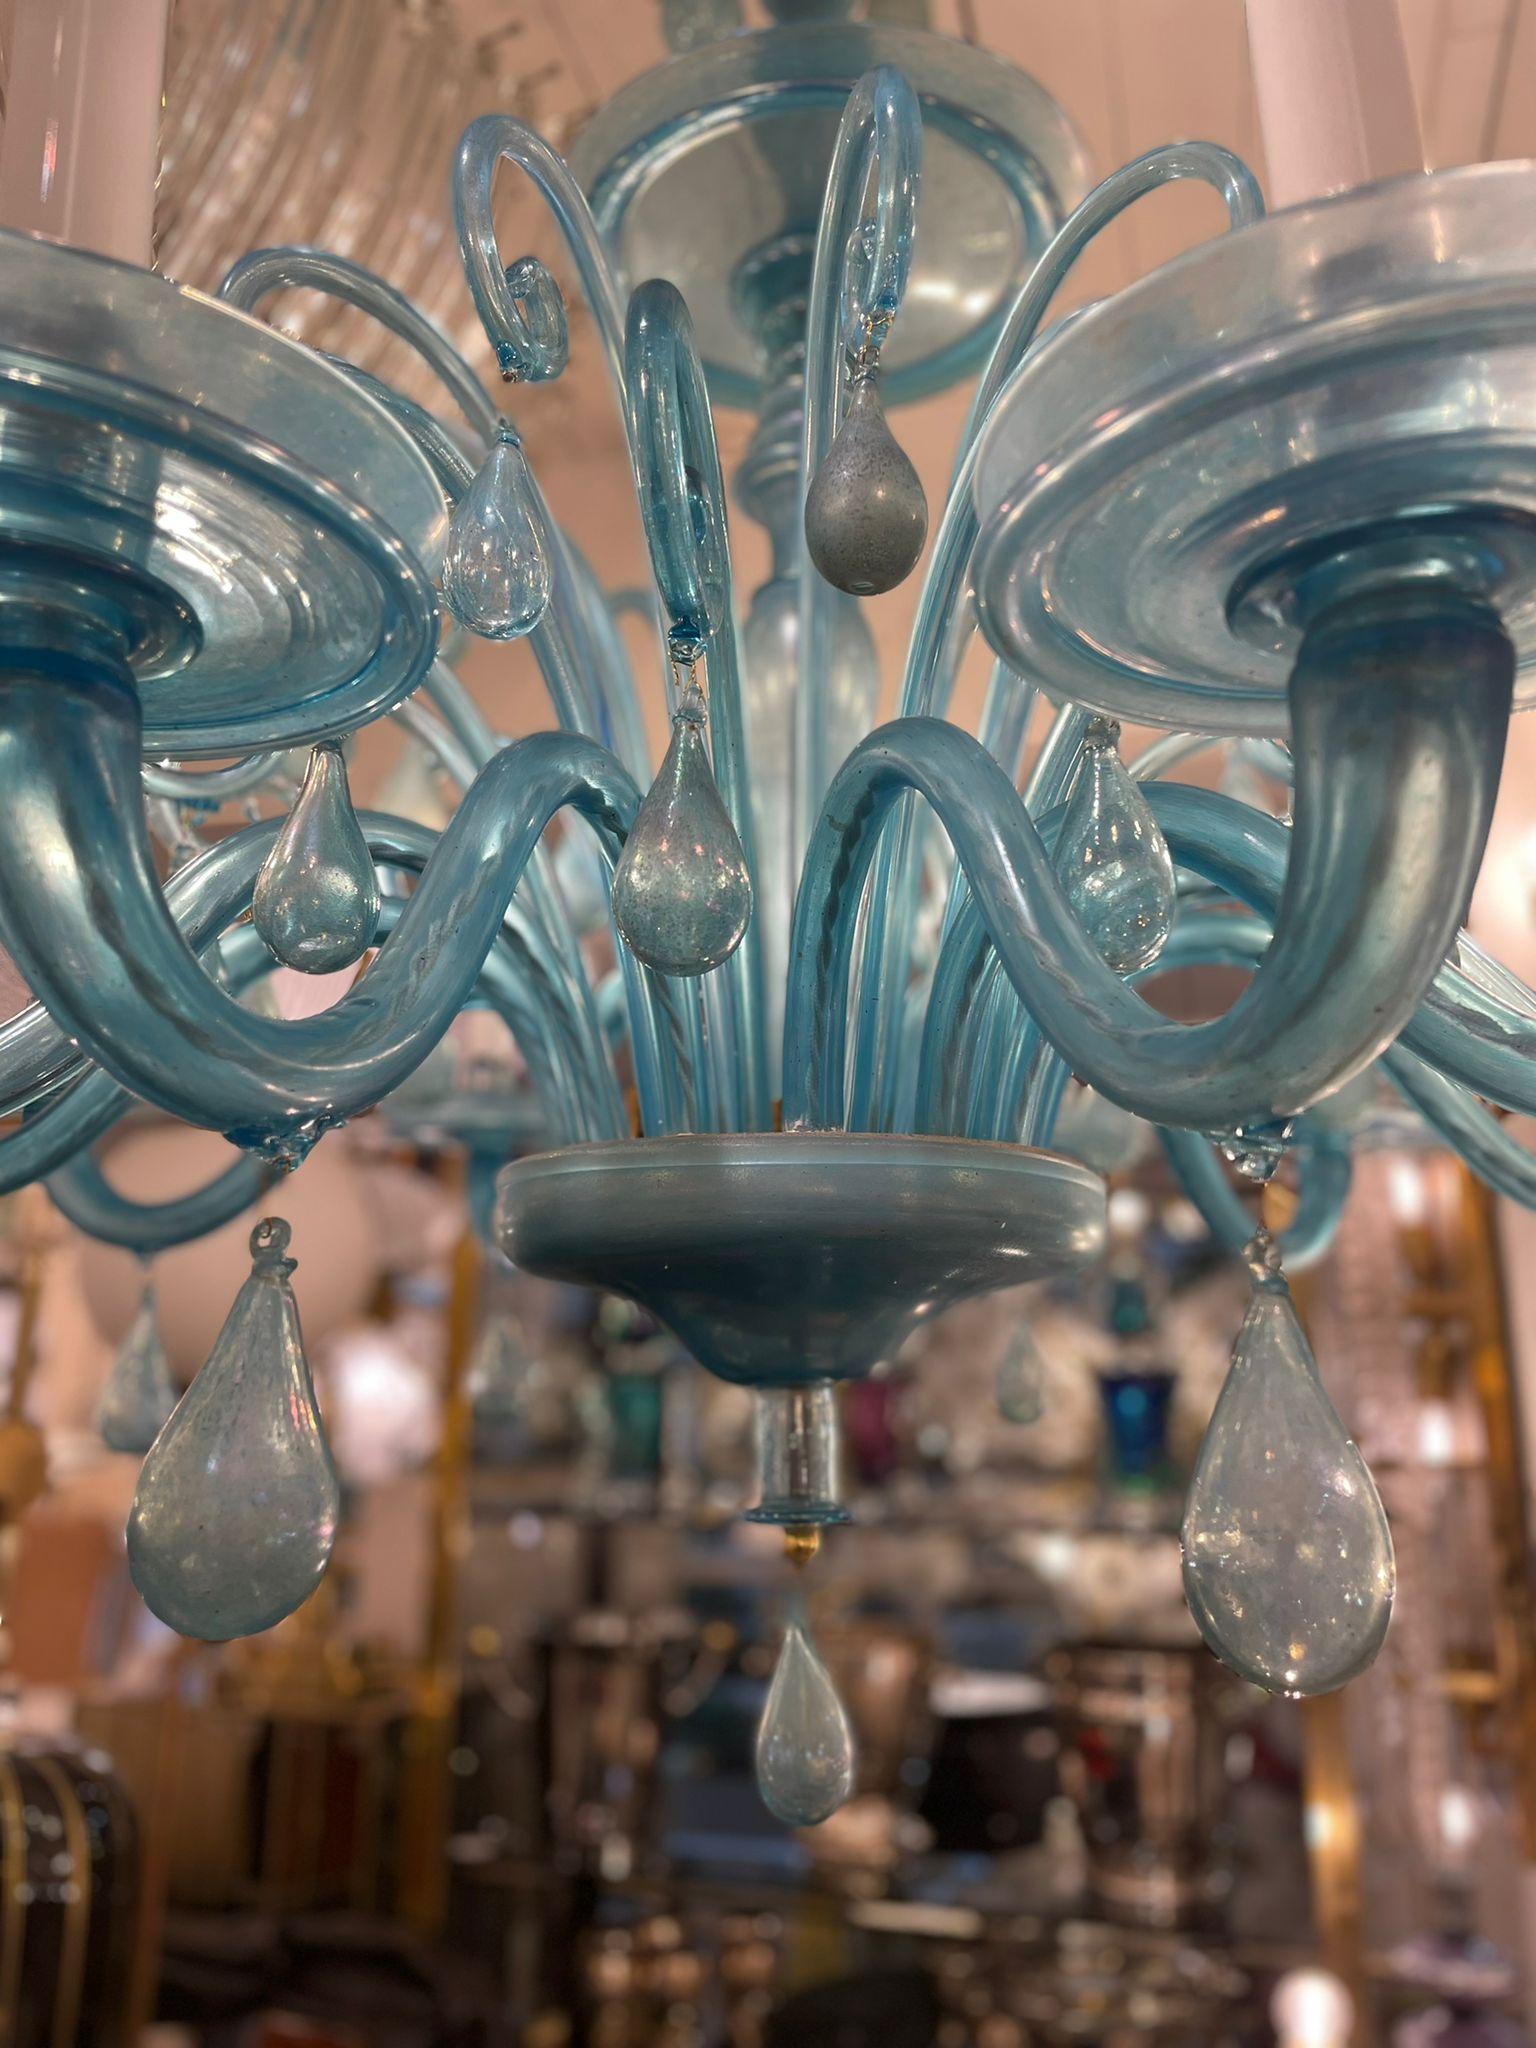 turquoise chandelier